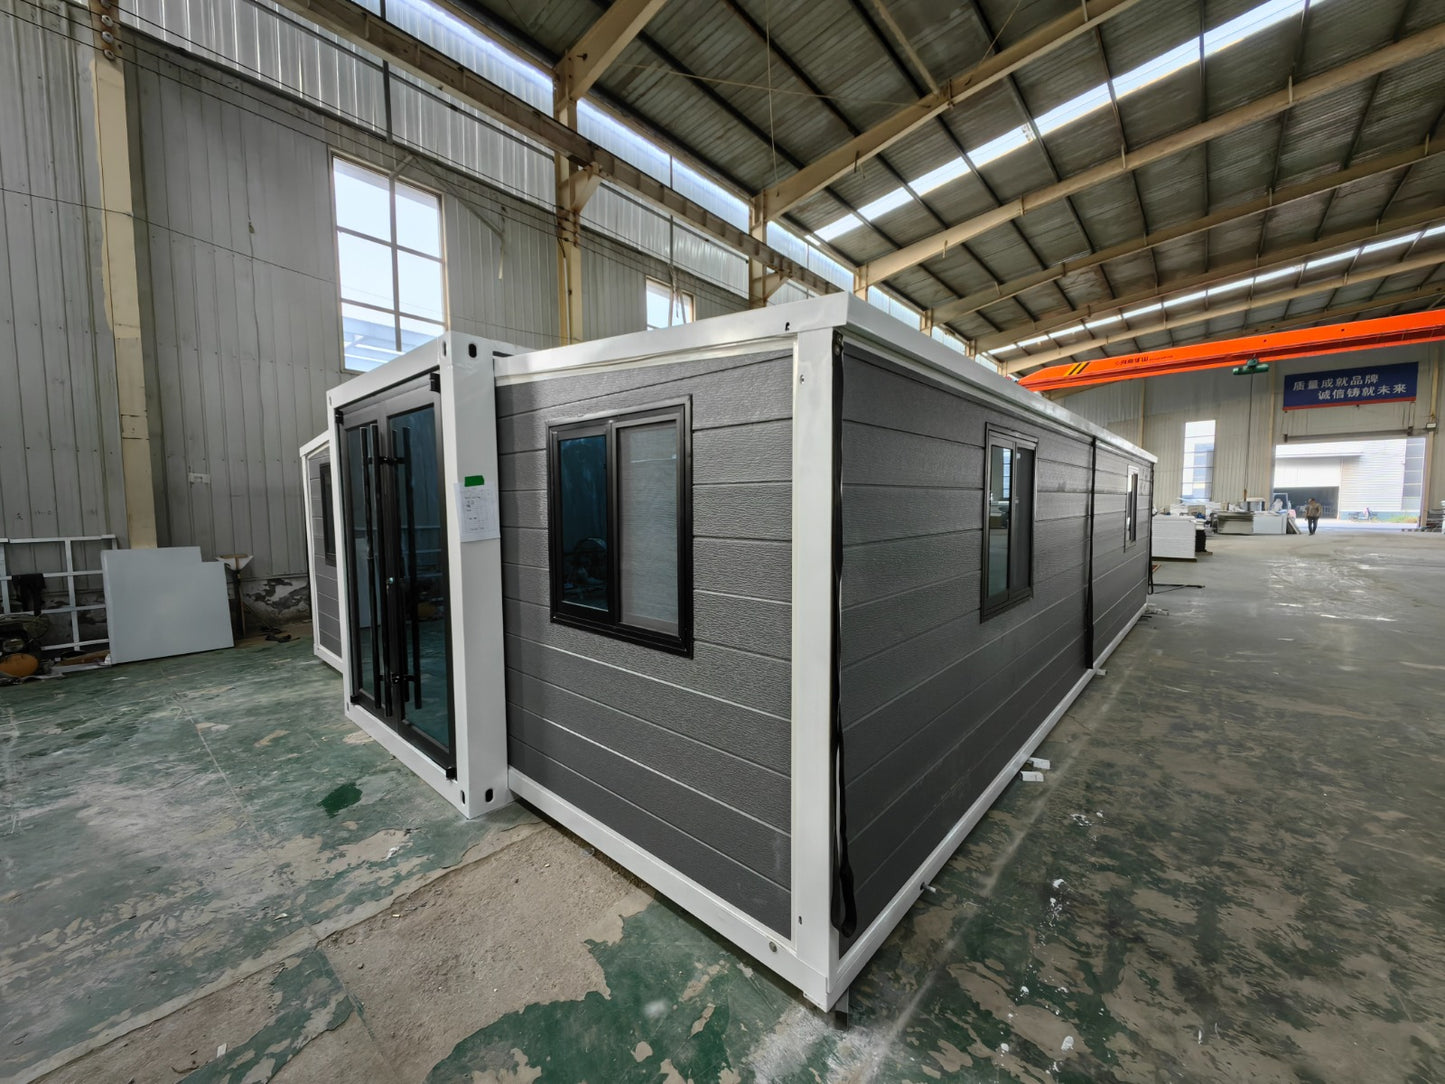 3D siding panels for 20' house